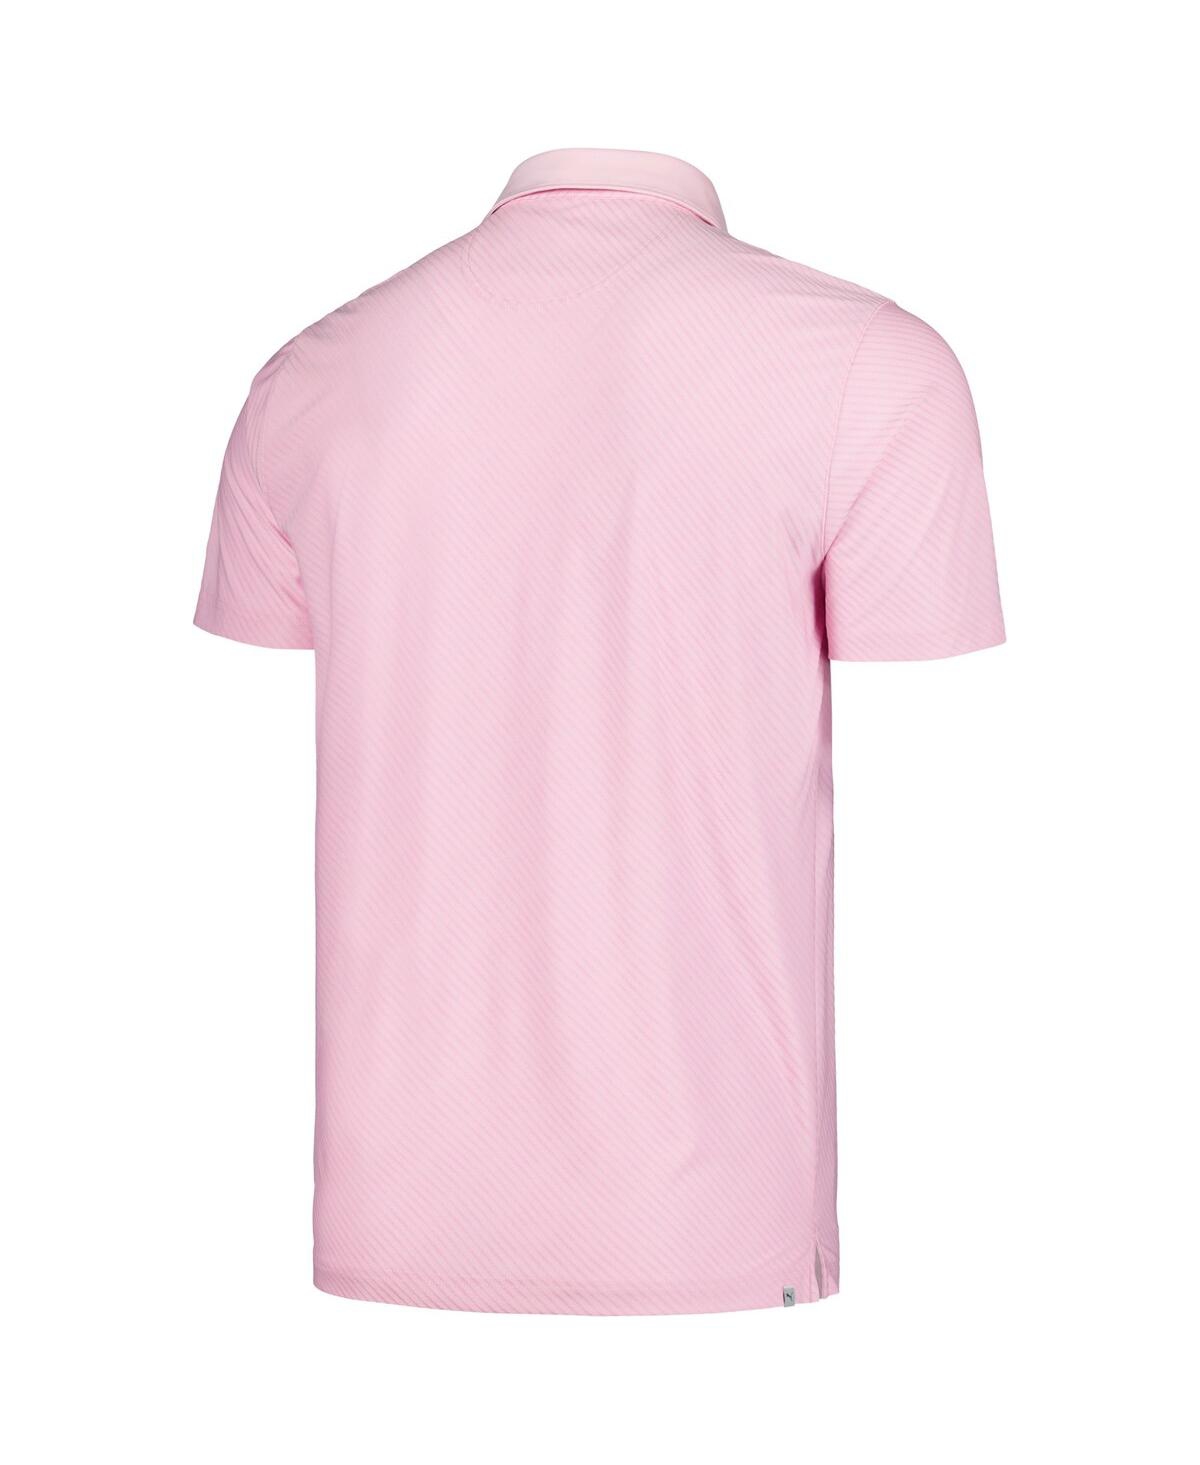 Shop Puma Men's  Pink Arnold Palmer Invitational Jacquard Stripe Mattr Polo Shirt